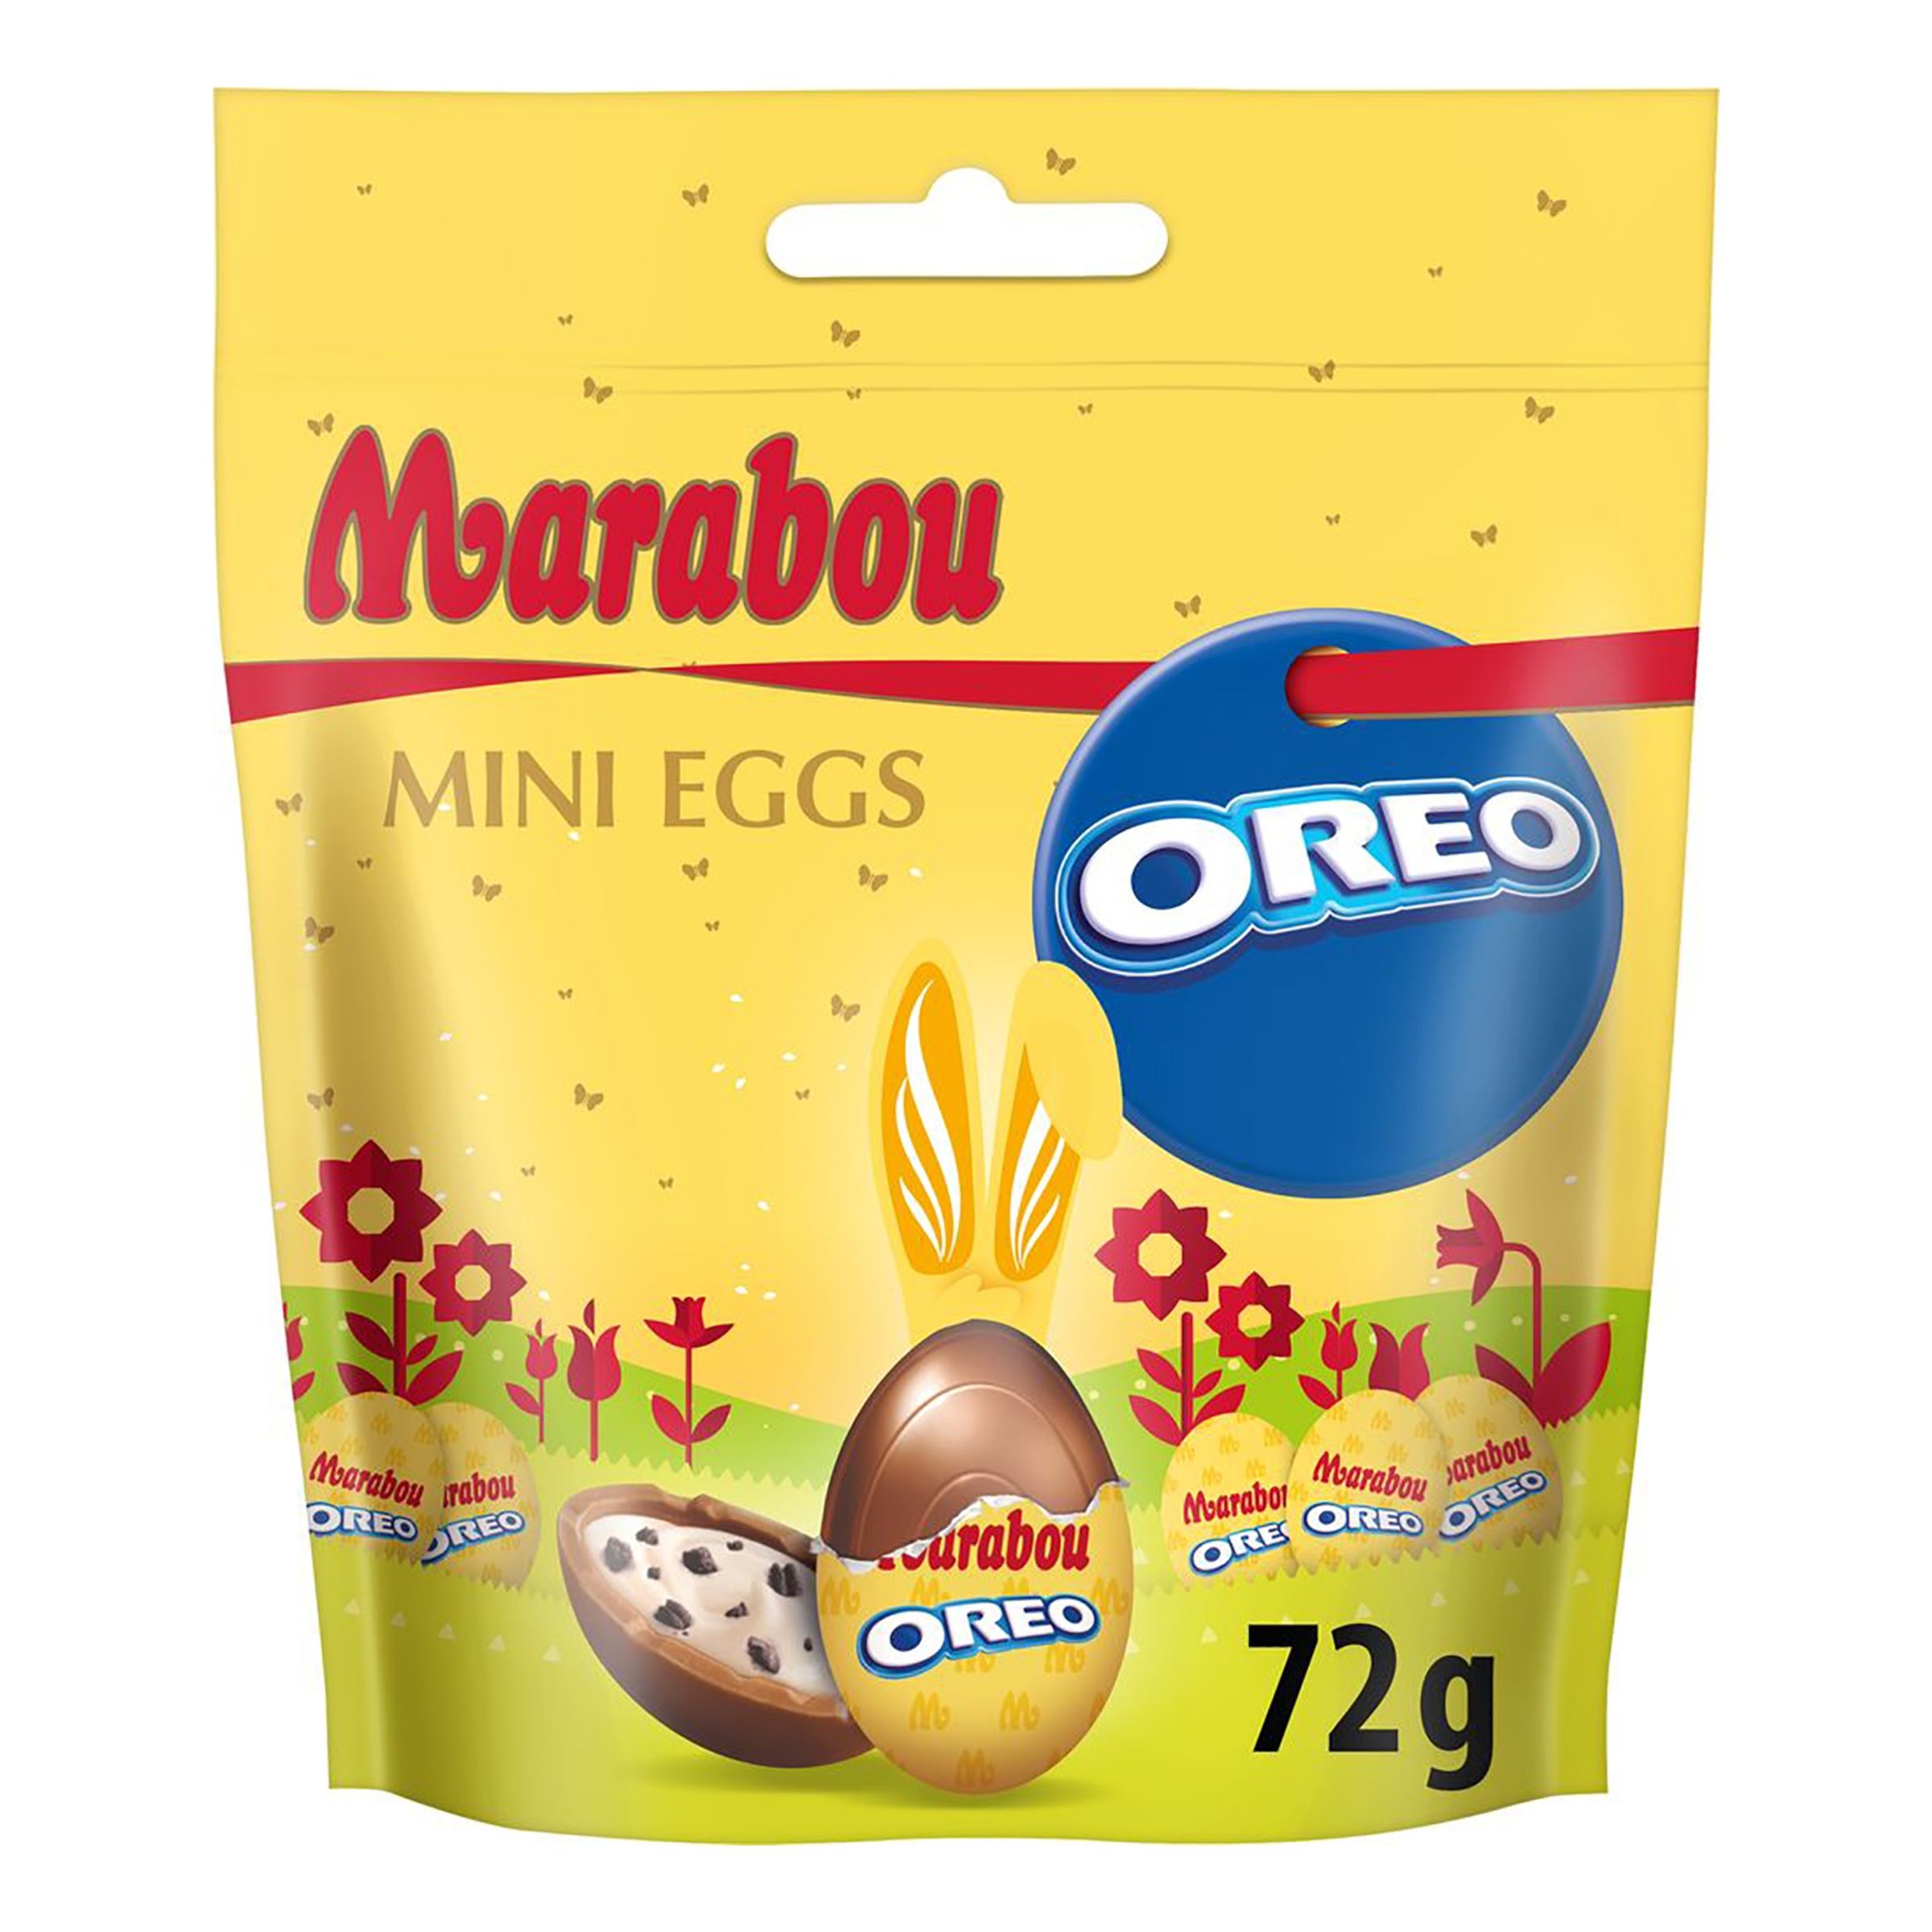 Marabou Oreo Mini Eggs - 72 gram